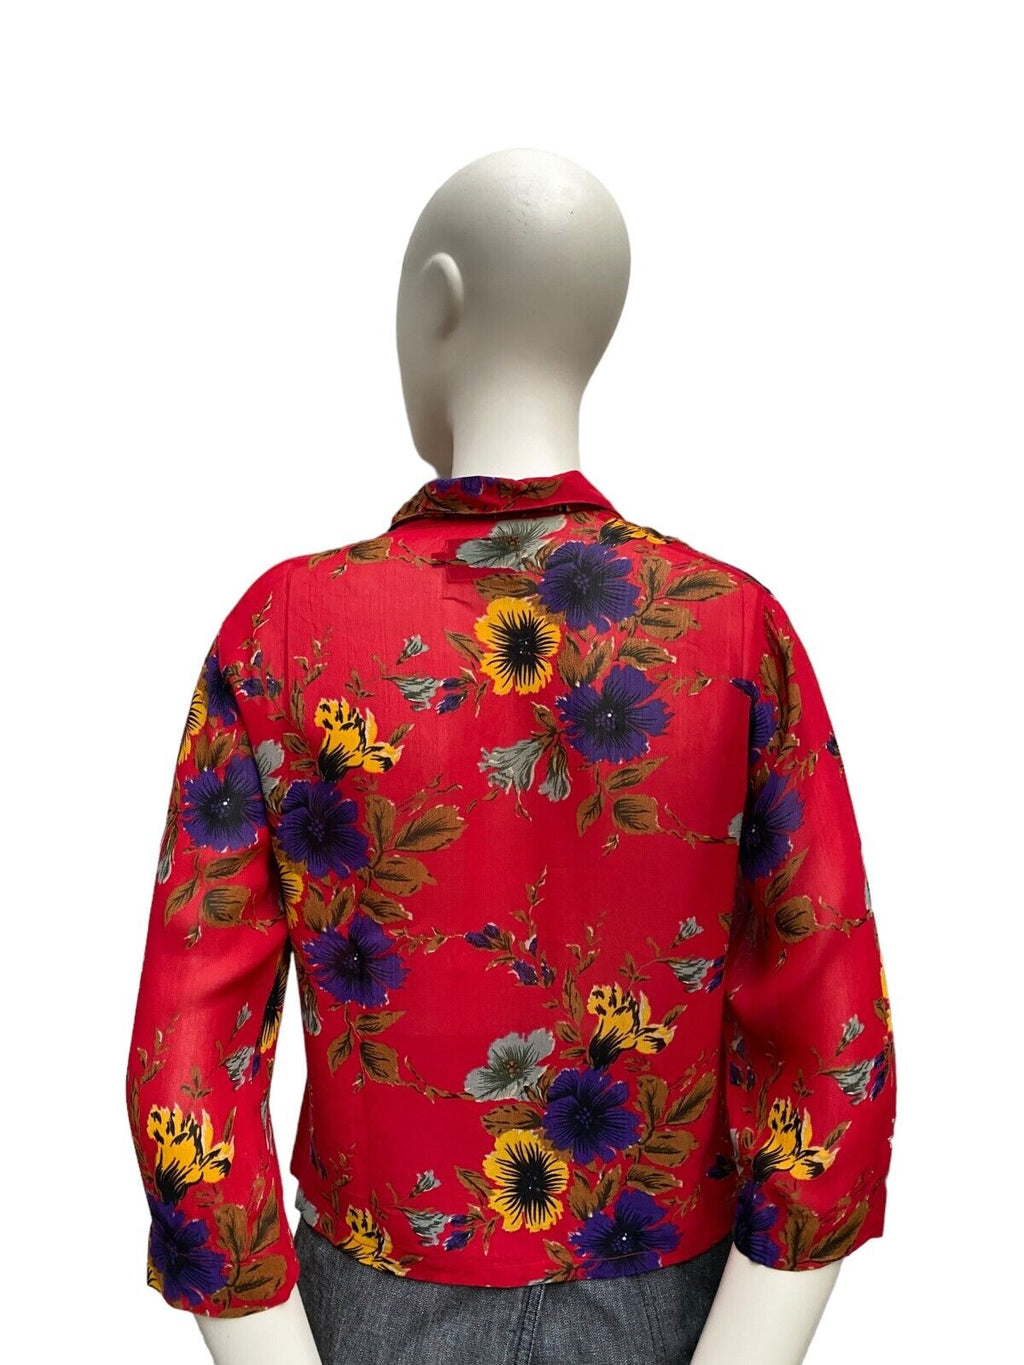 Vintage Red Floral shirt  Size 42 fits M